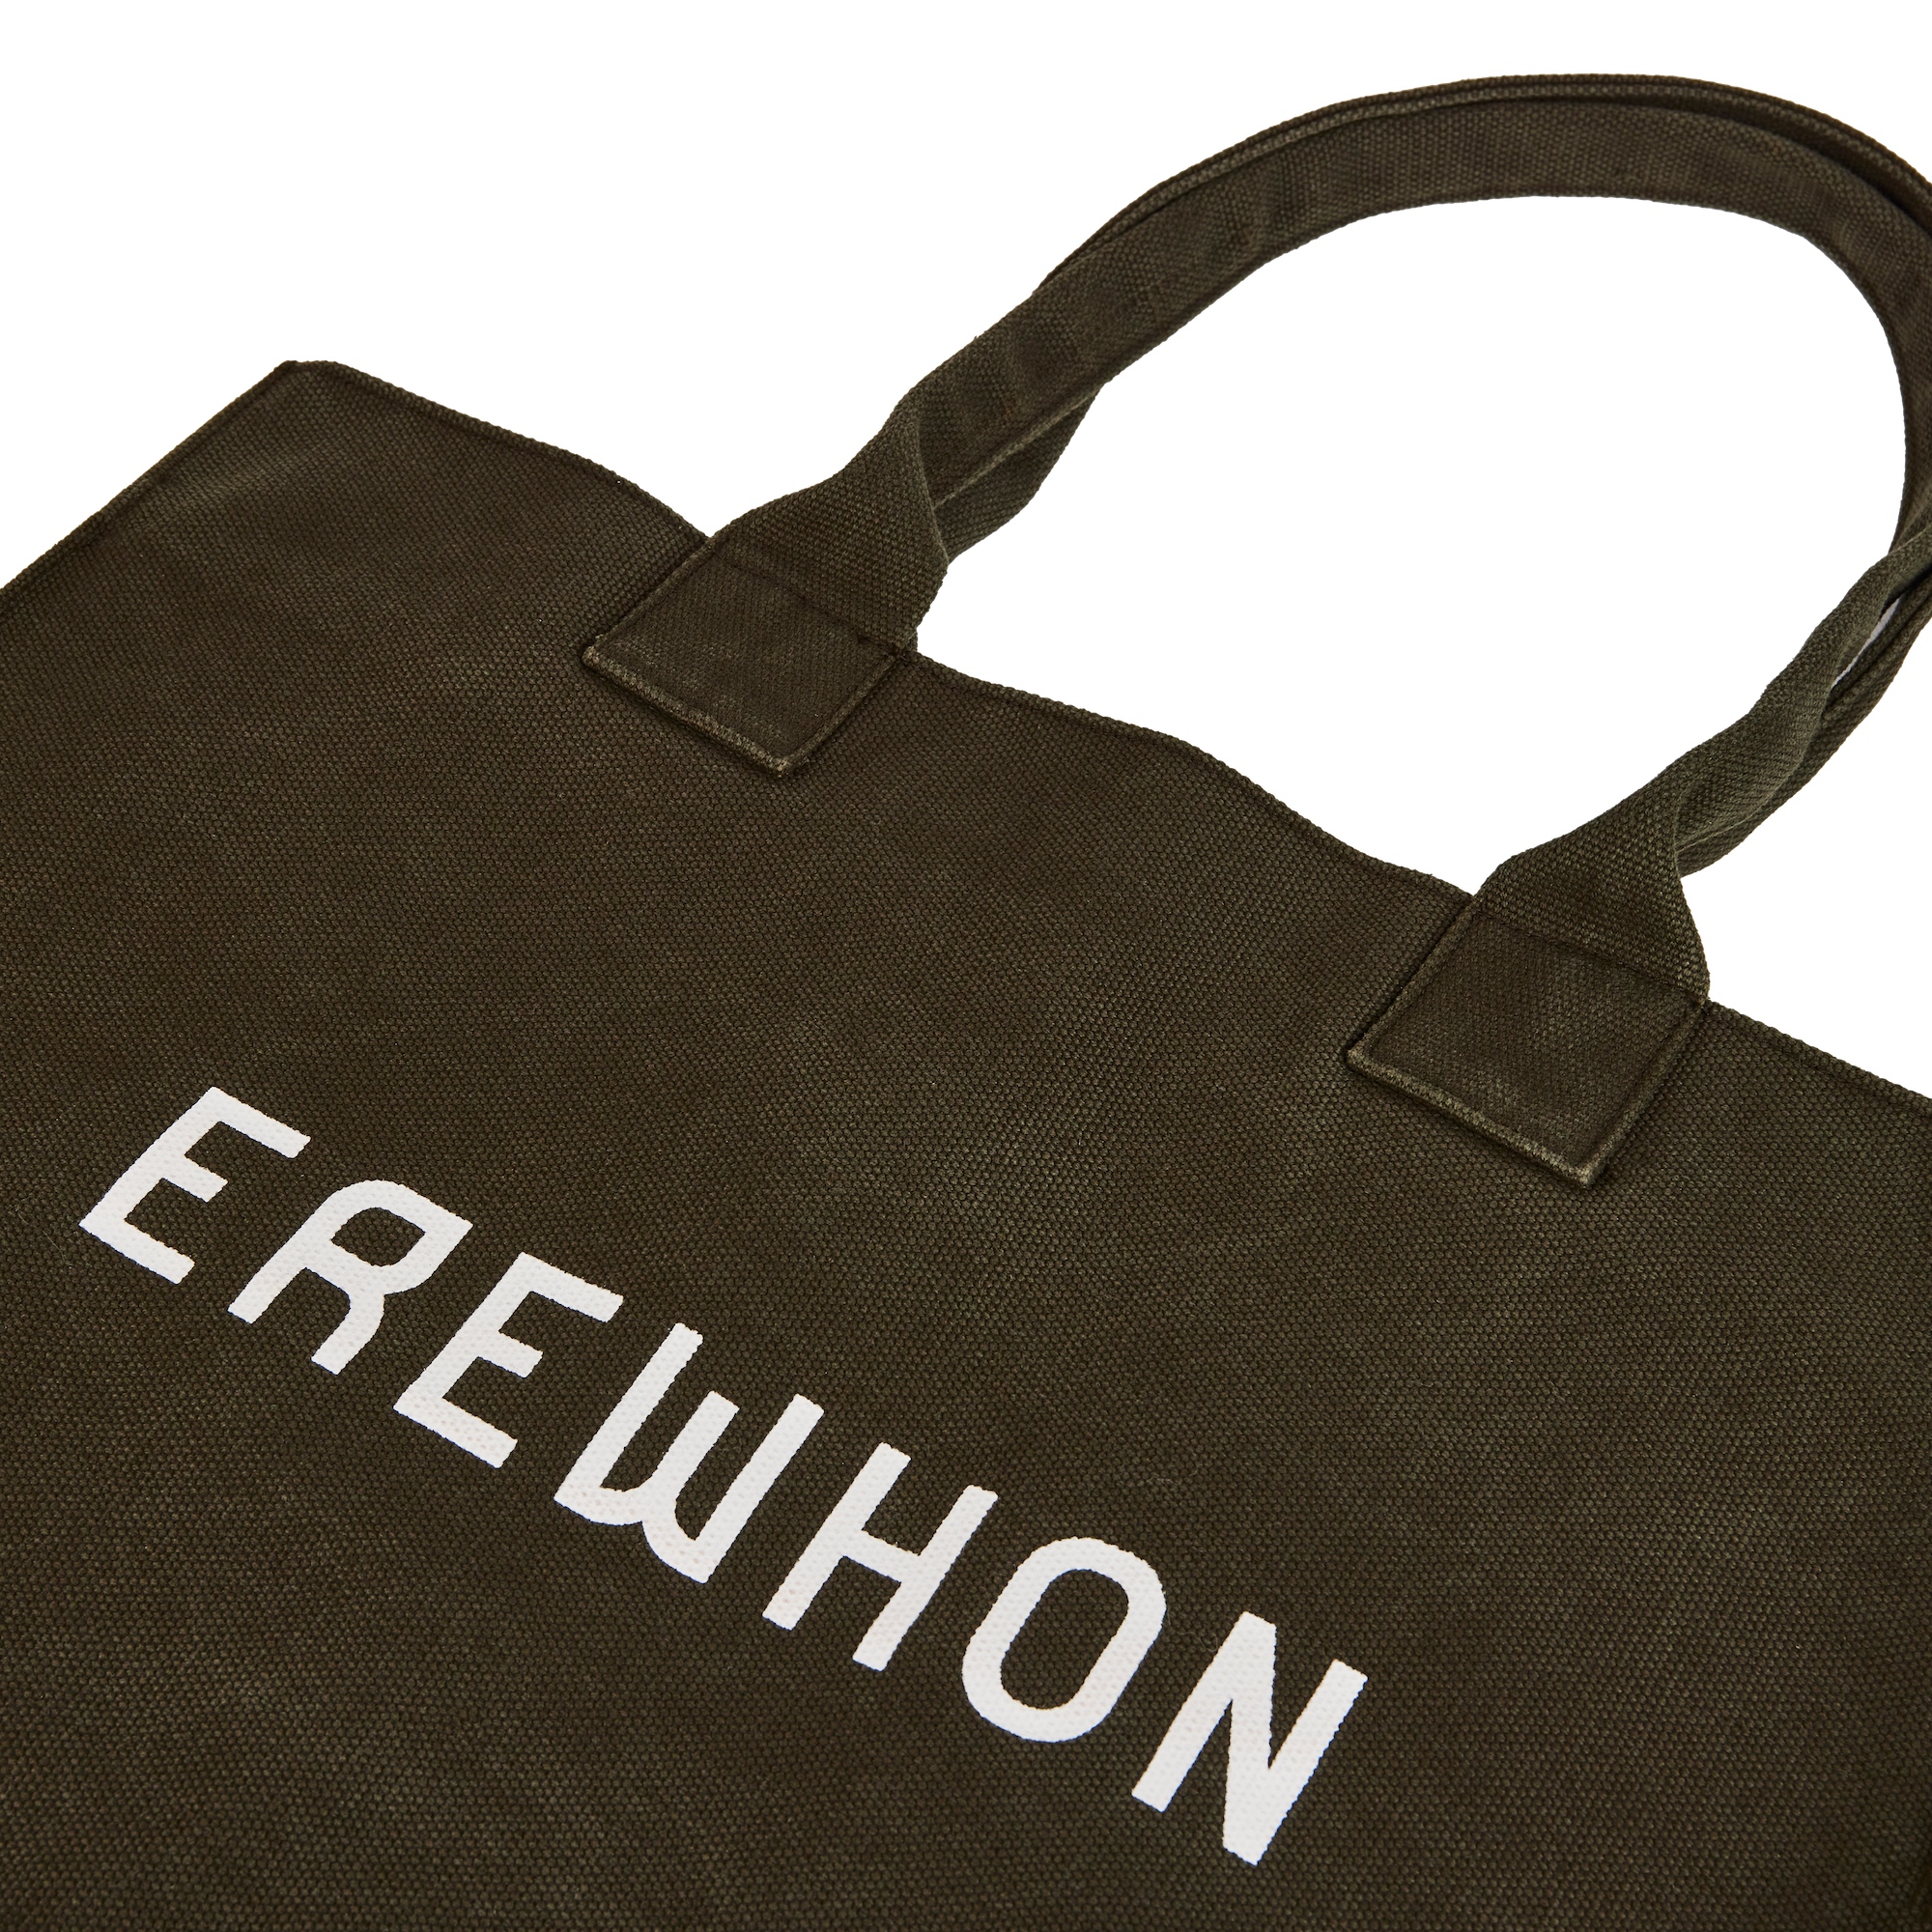 Erewhon Traveler Bag - Peat Style